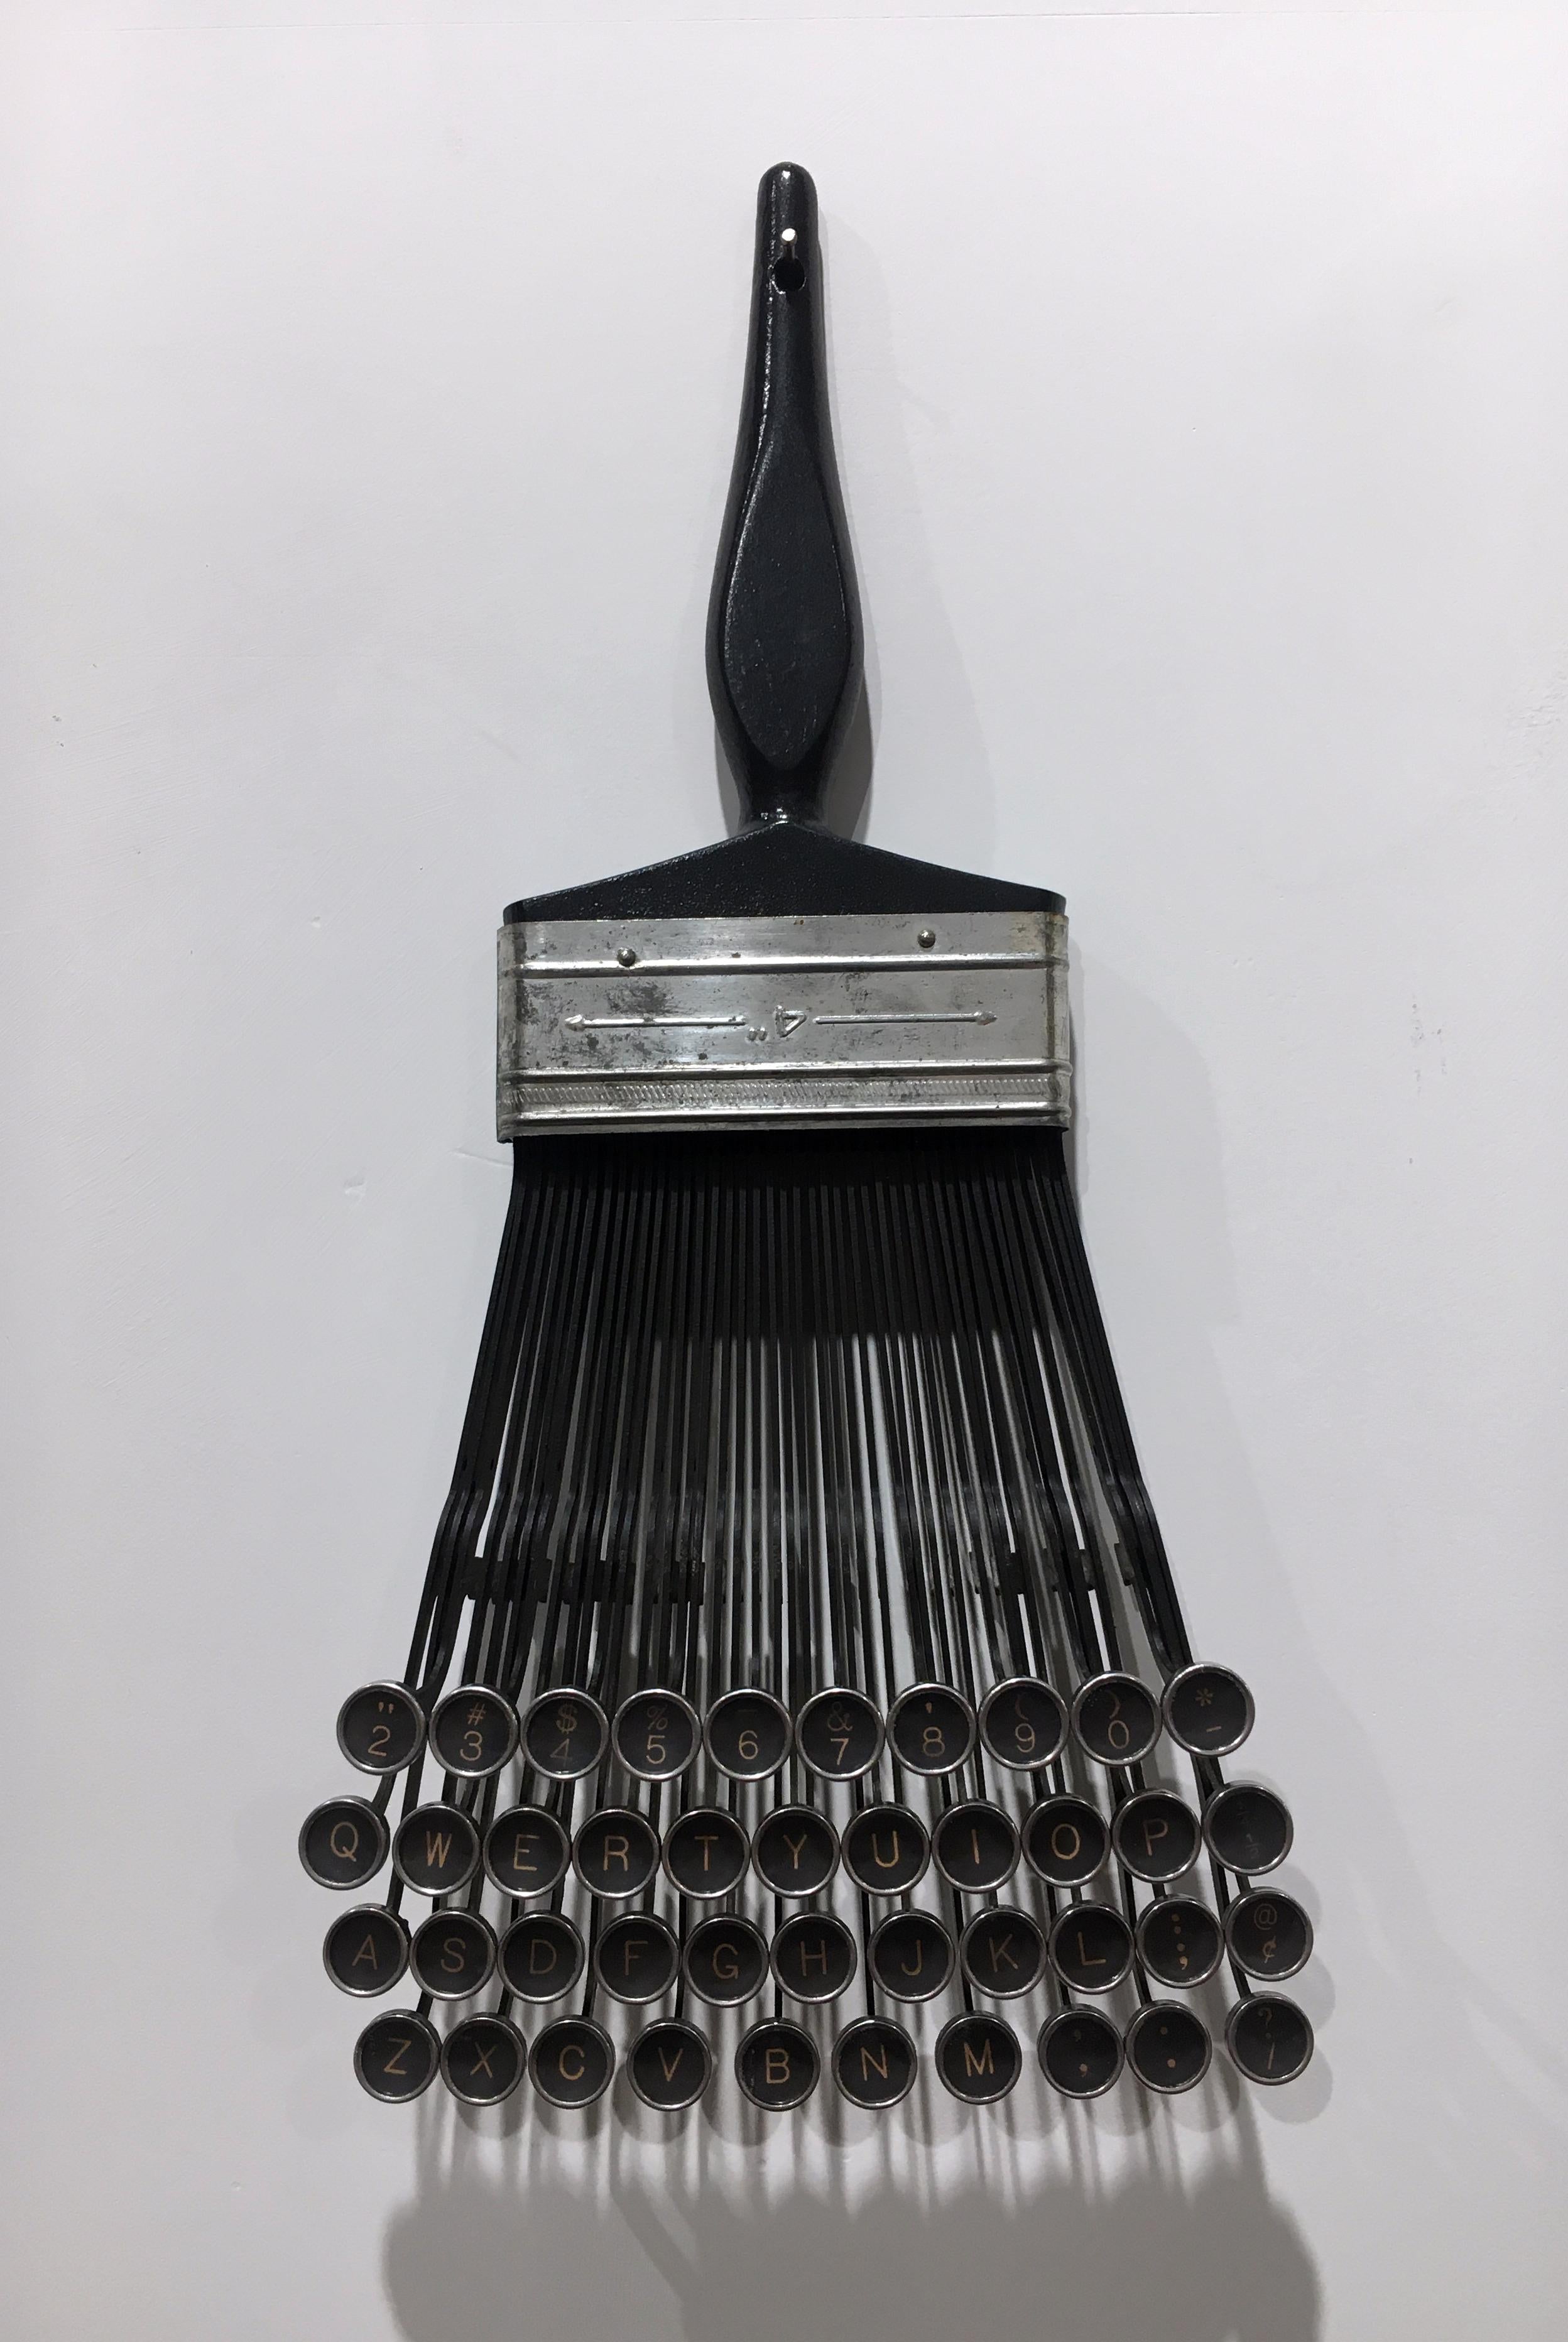 Howard Jones Still-Life Sculpture - "Typewriter Brush", Contemporary Surrealist Mixed Media Sculpture, Metal, Wood